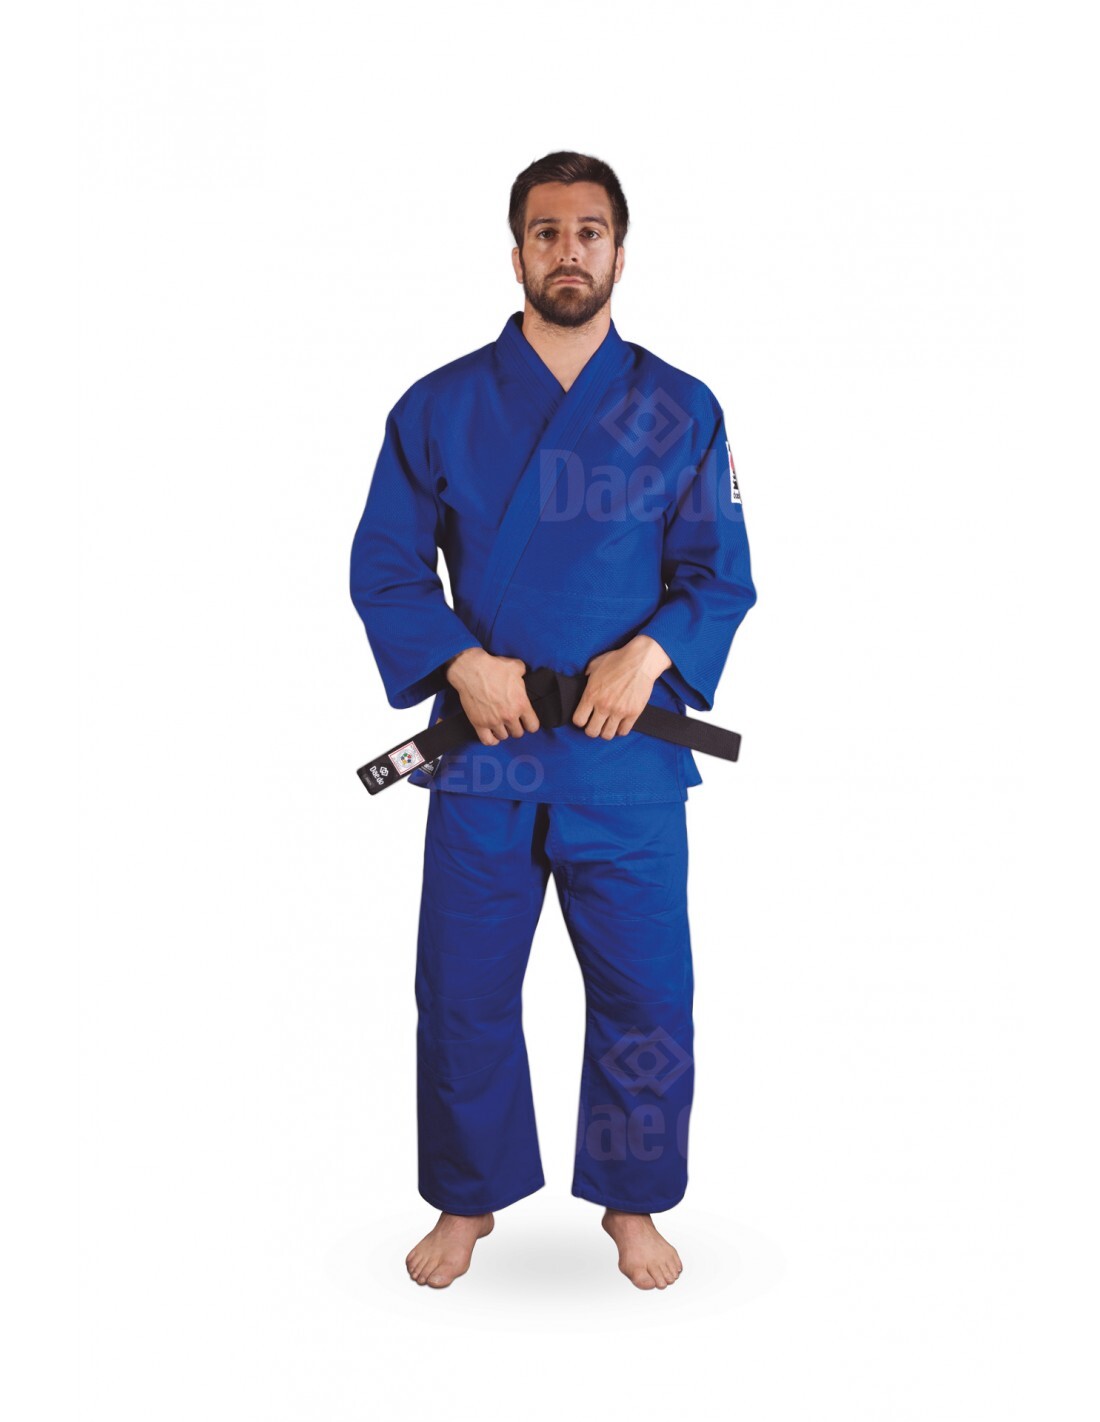 DAEDO - "Gold" Judo Gi/Uniform - Blue - Size 00/120cm